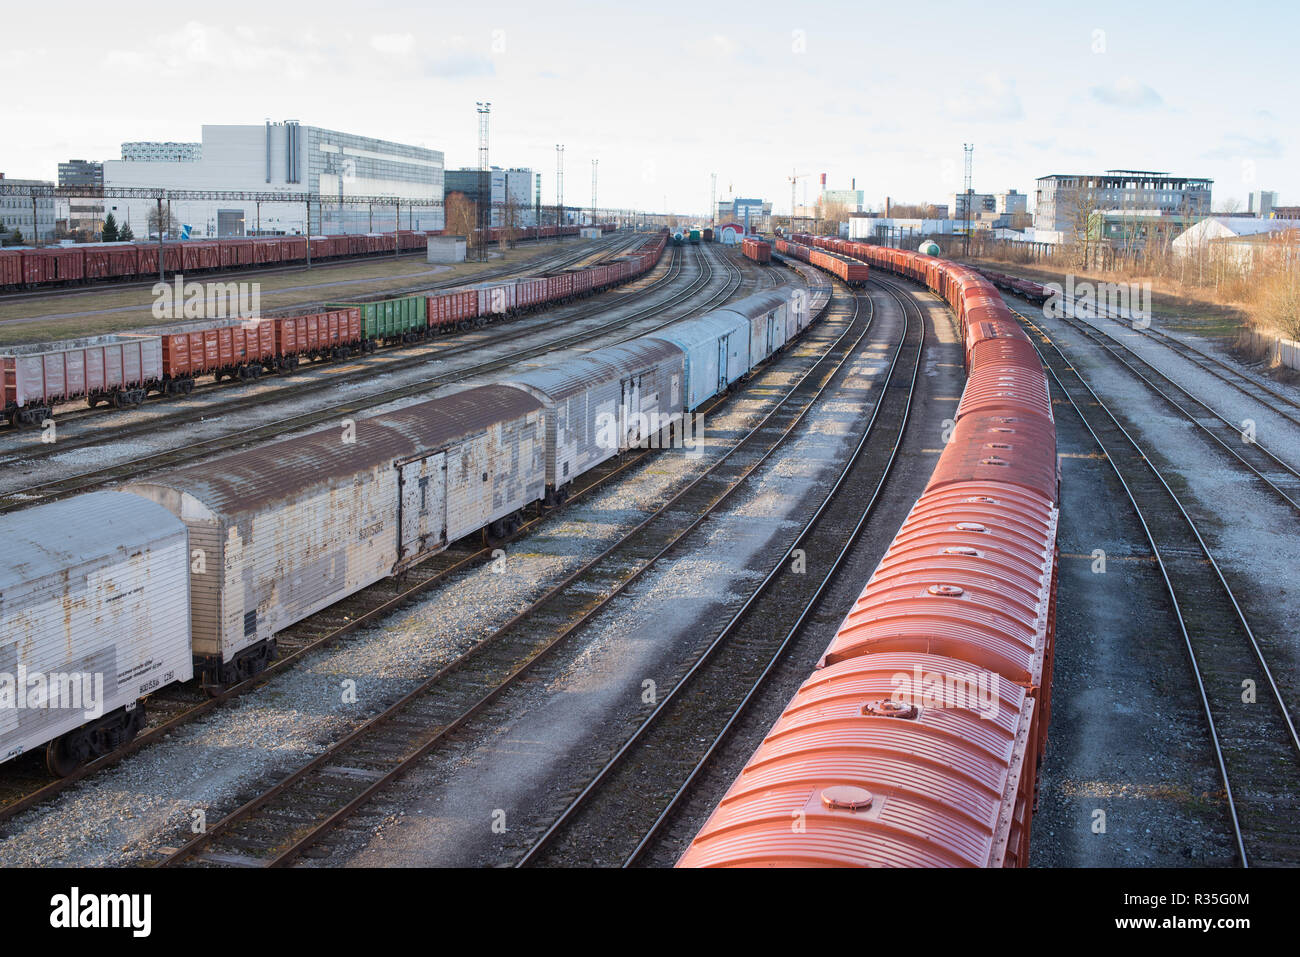 Tallinn, Estonia - December 27, 2015: Railway Station of Tallinn, Ülemiste. Sixteen rails wide transportation hub with long cargo trains. Stock Photo